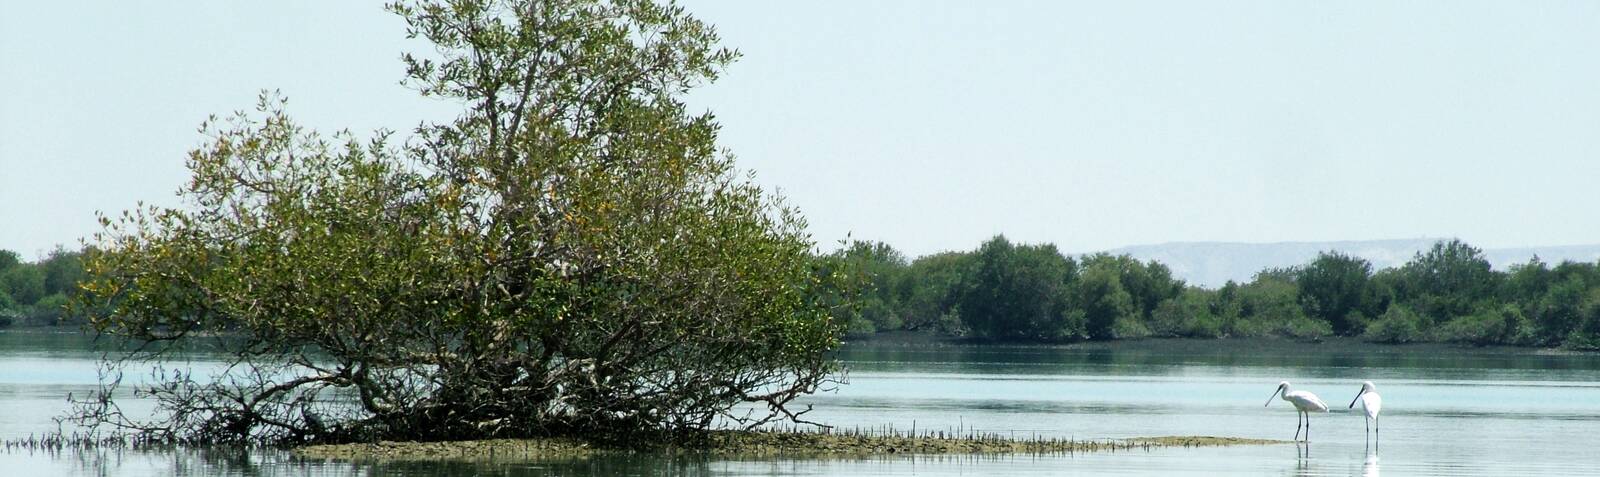 Bosque de Hara (manglares) de Qeshm